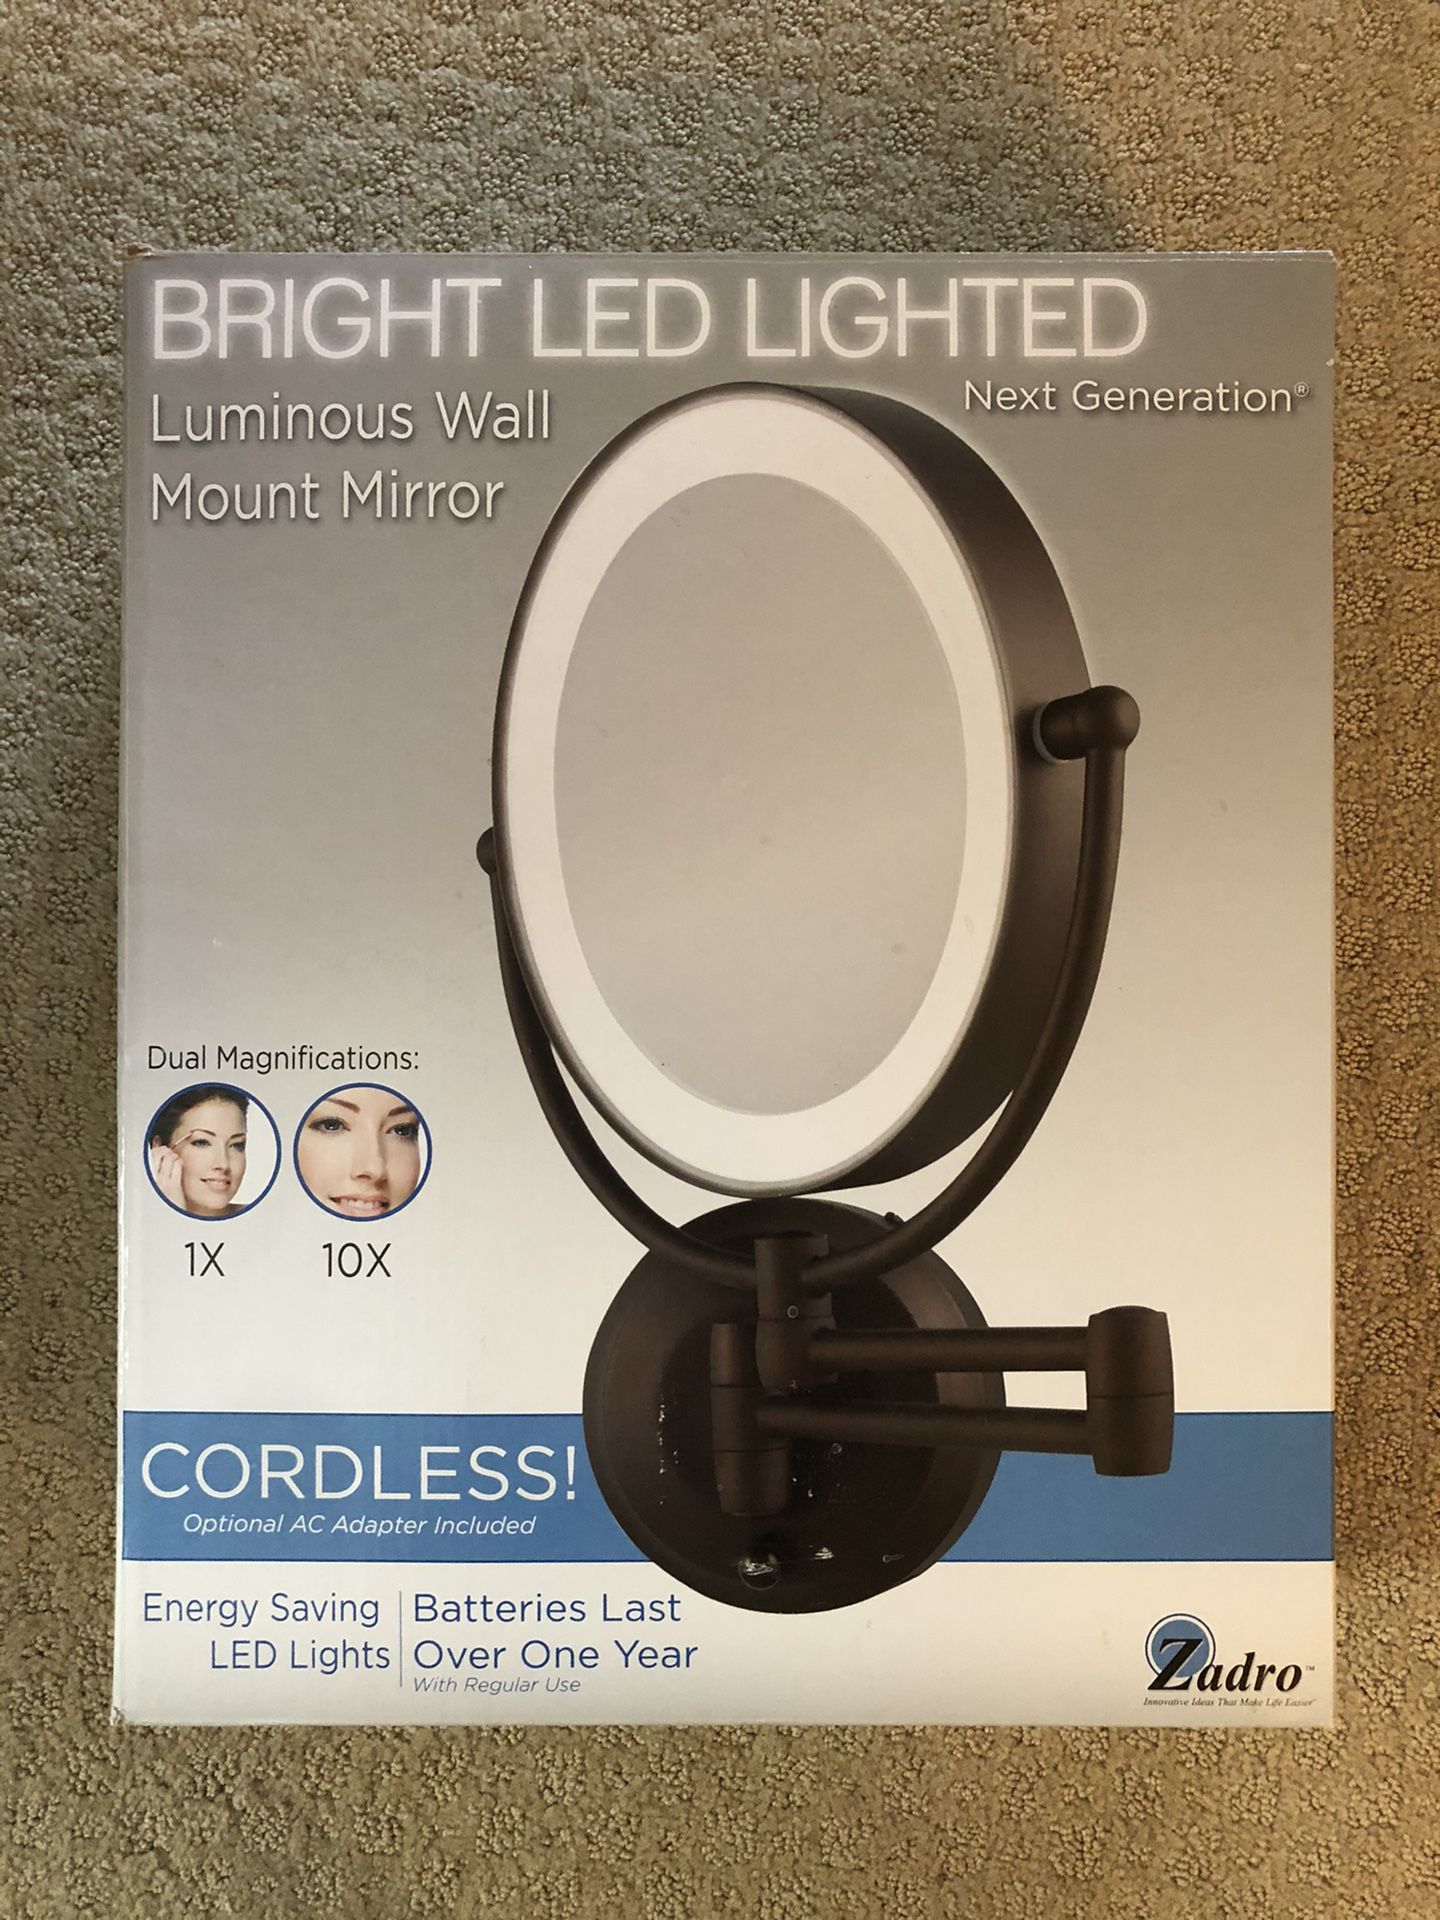 New! Zadro Next Generation LED Lighted Cordless Bathroom Mirror